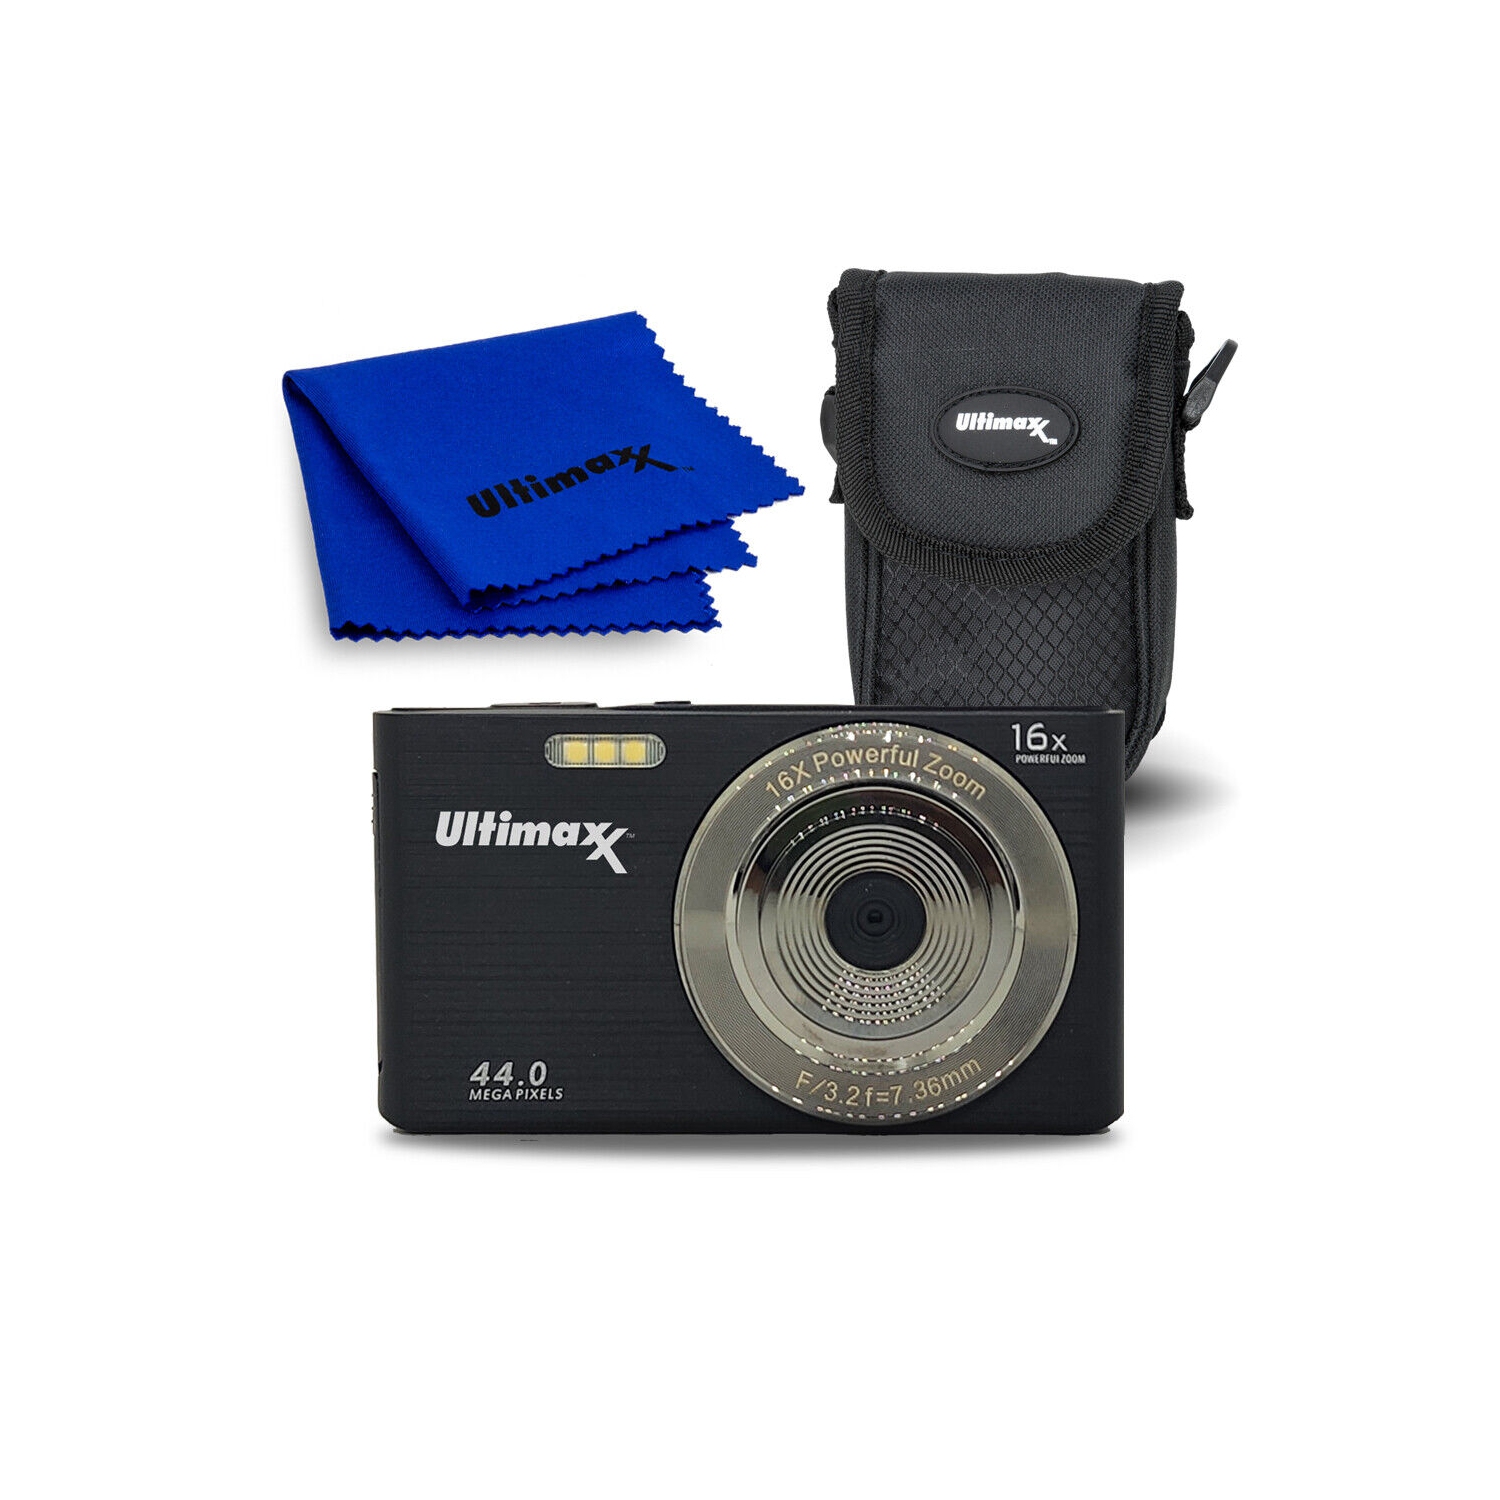 Ultimaxx 44MP Digital Compact Camera with 16x Digital Zoom w/ 32GB Card Kit